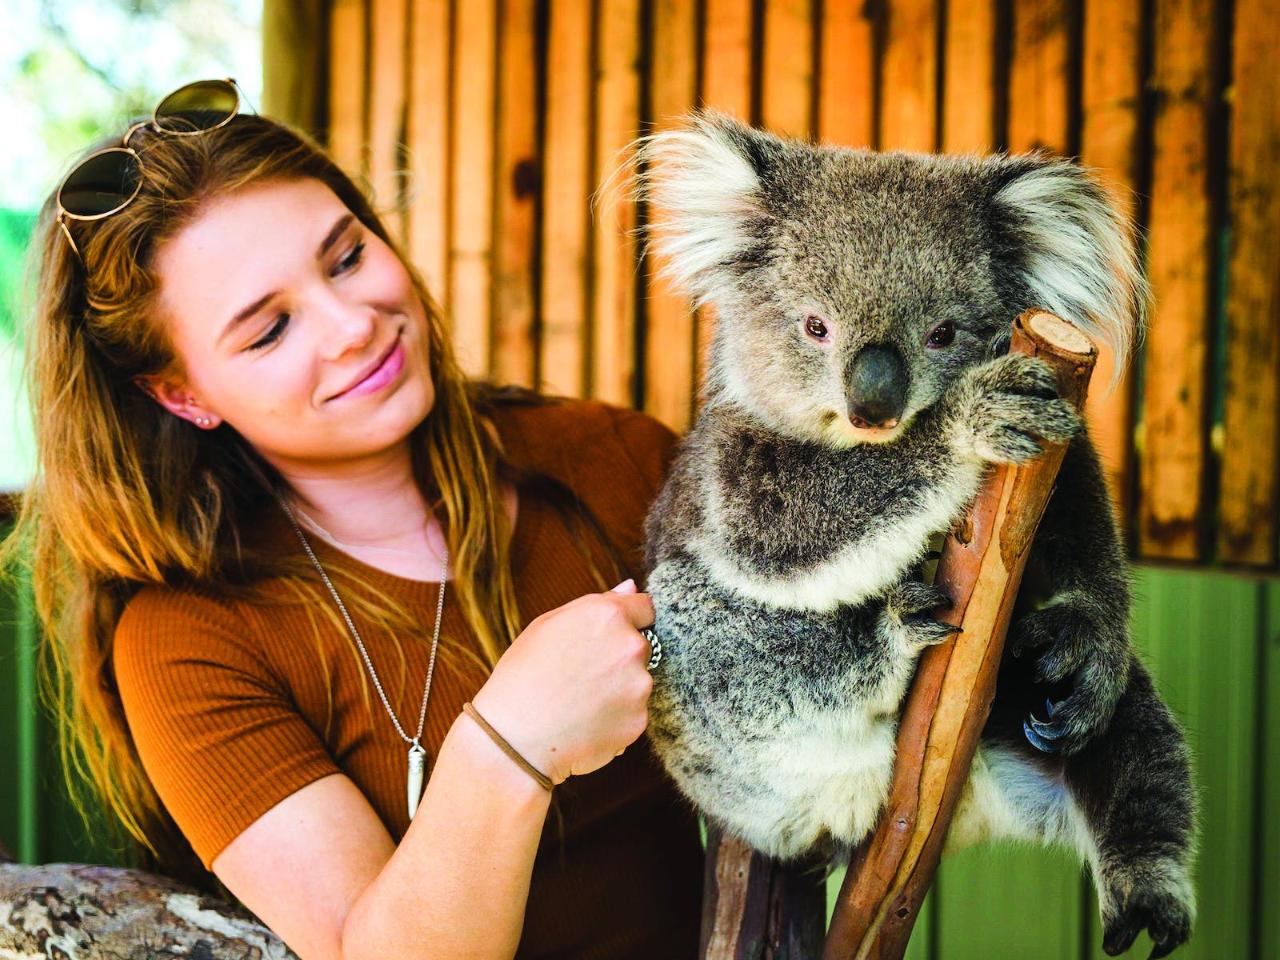 Mornington Peninsula Tour: Moonlit Sanctuary and Arthur Seat Adventure Inc Koala Experience